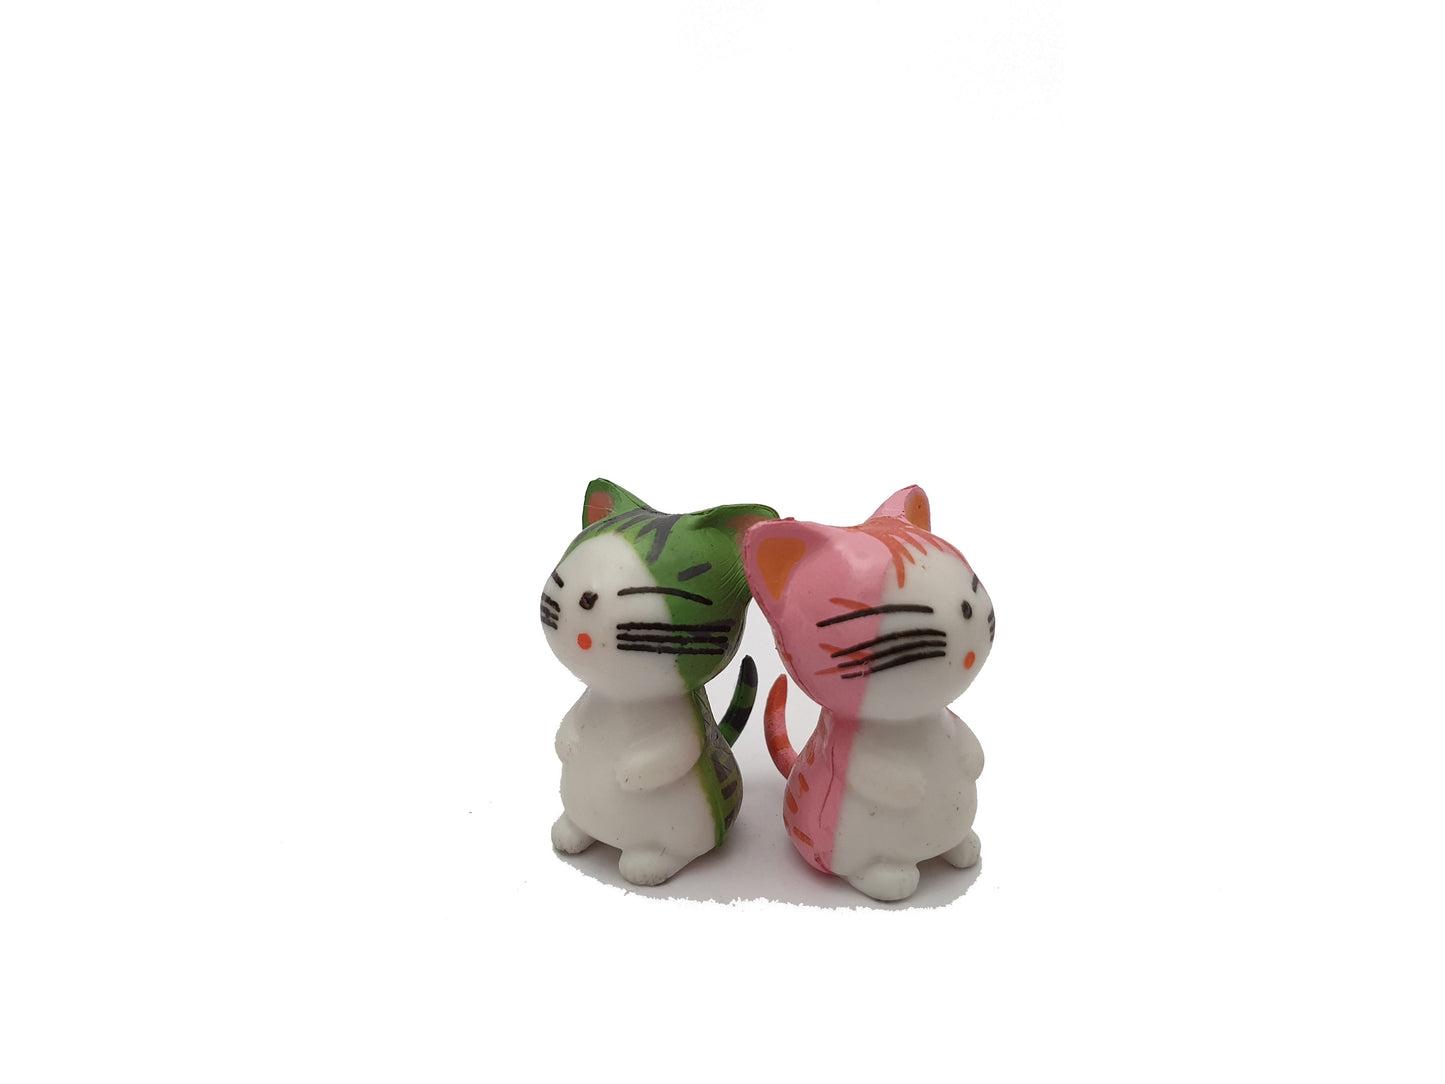 Miniature Green Cats for Miniature Dollhouse